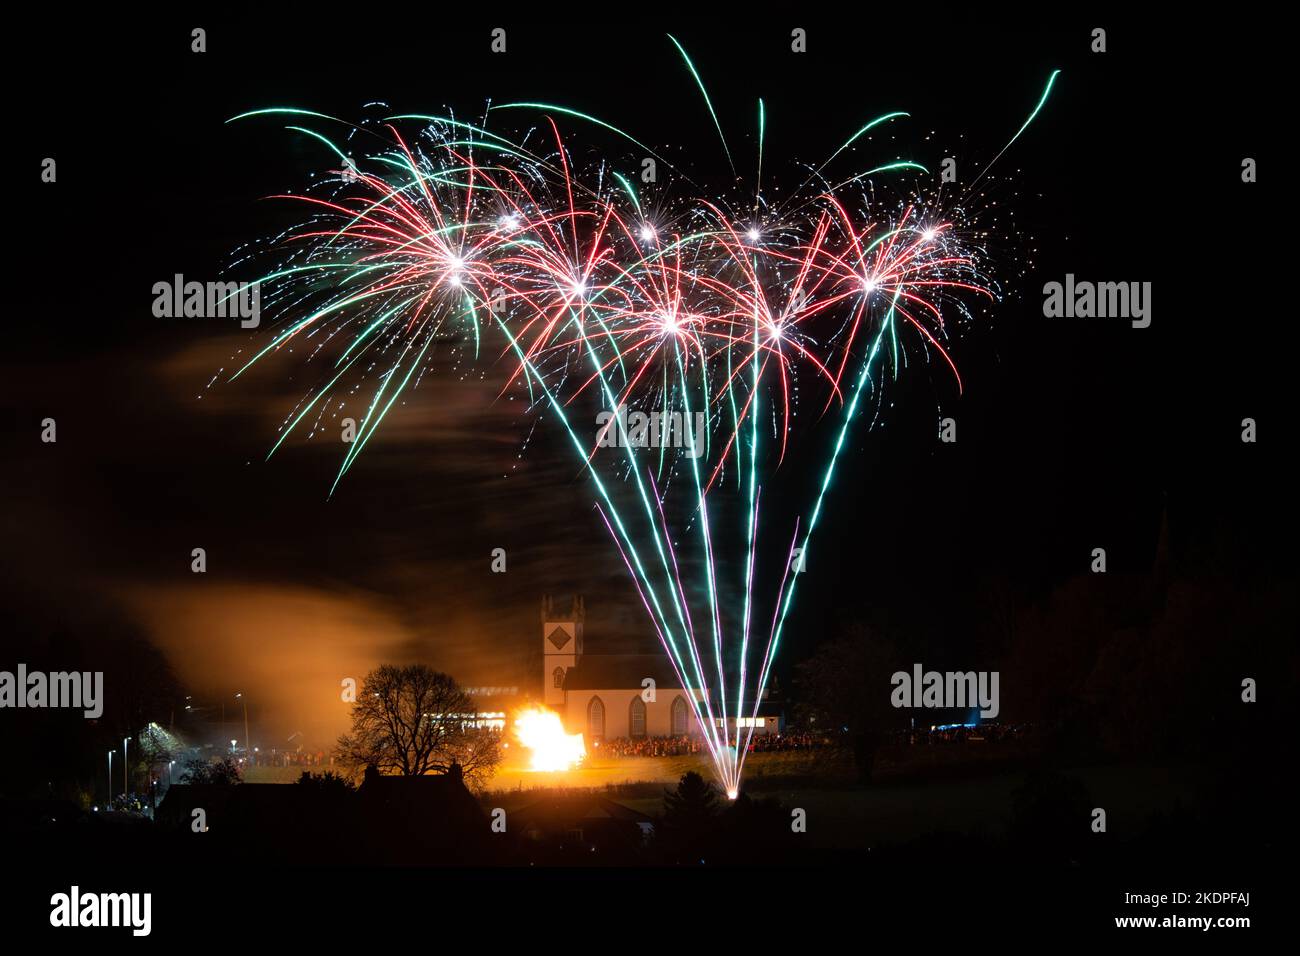 Village. community bonfire and firework display, Killearn, Stirling, Scotland UK Stock Photo